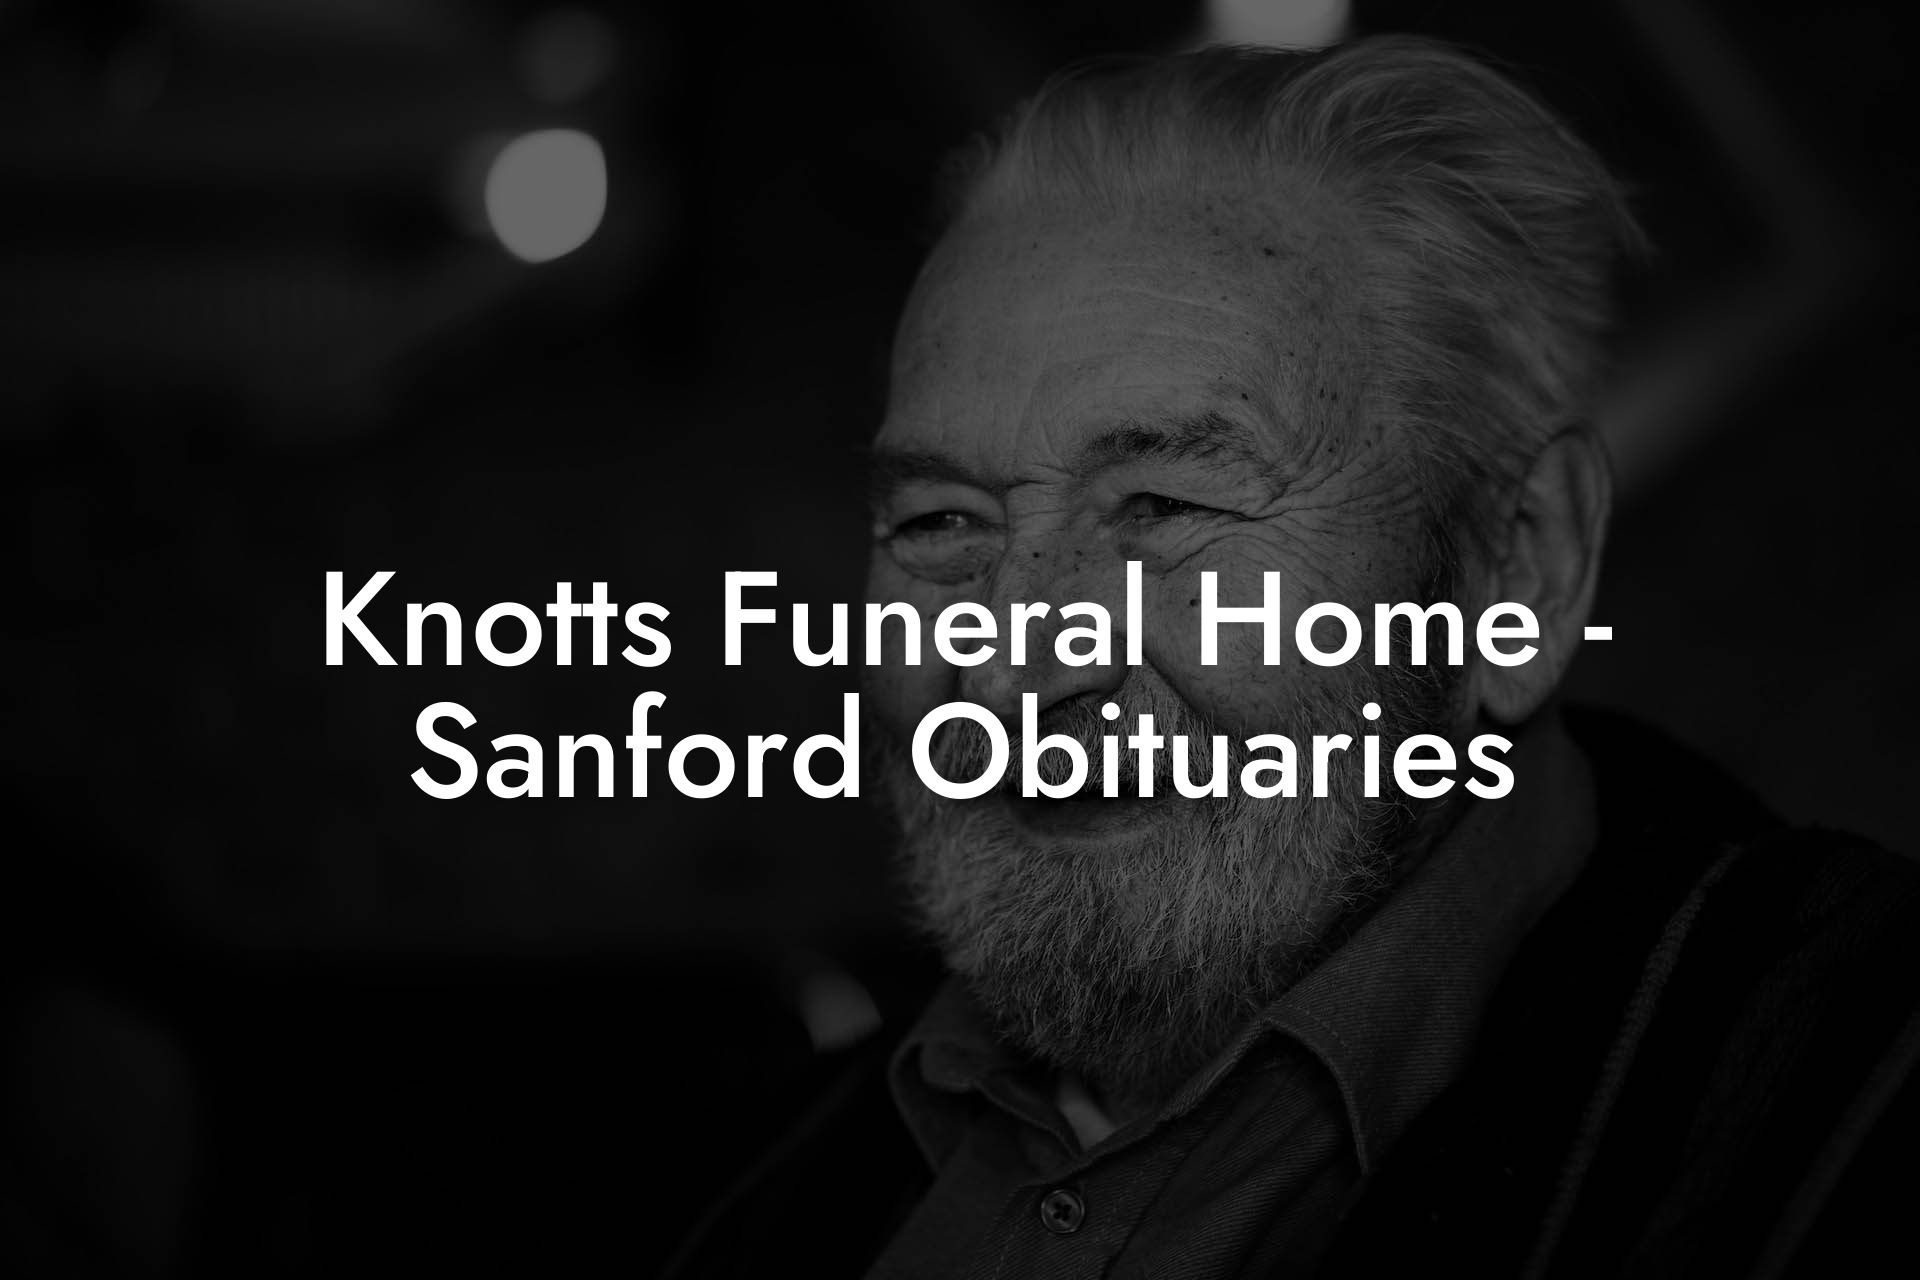 Knotts Funeral Home - Sanford Obituaries